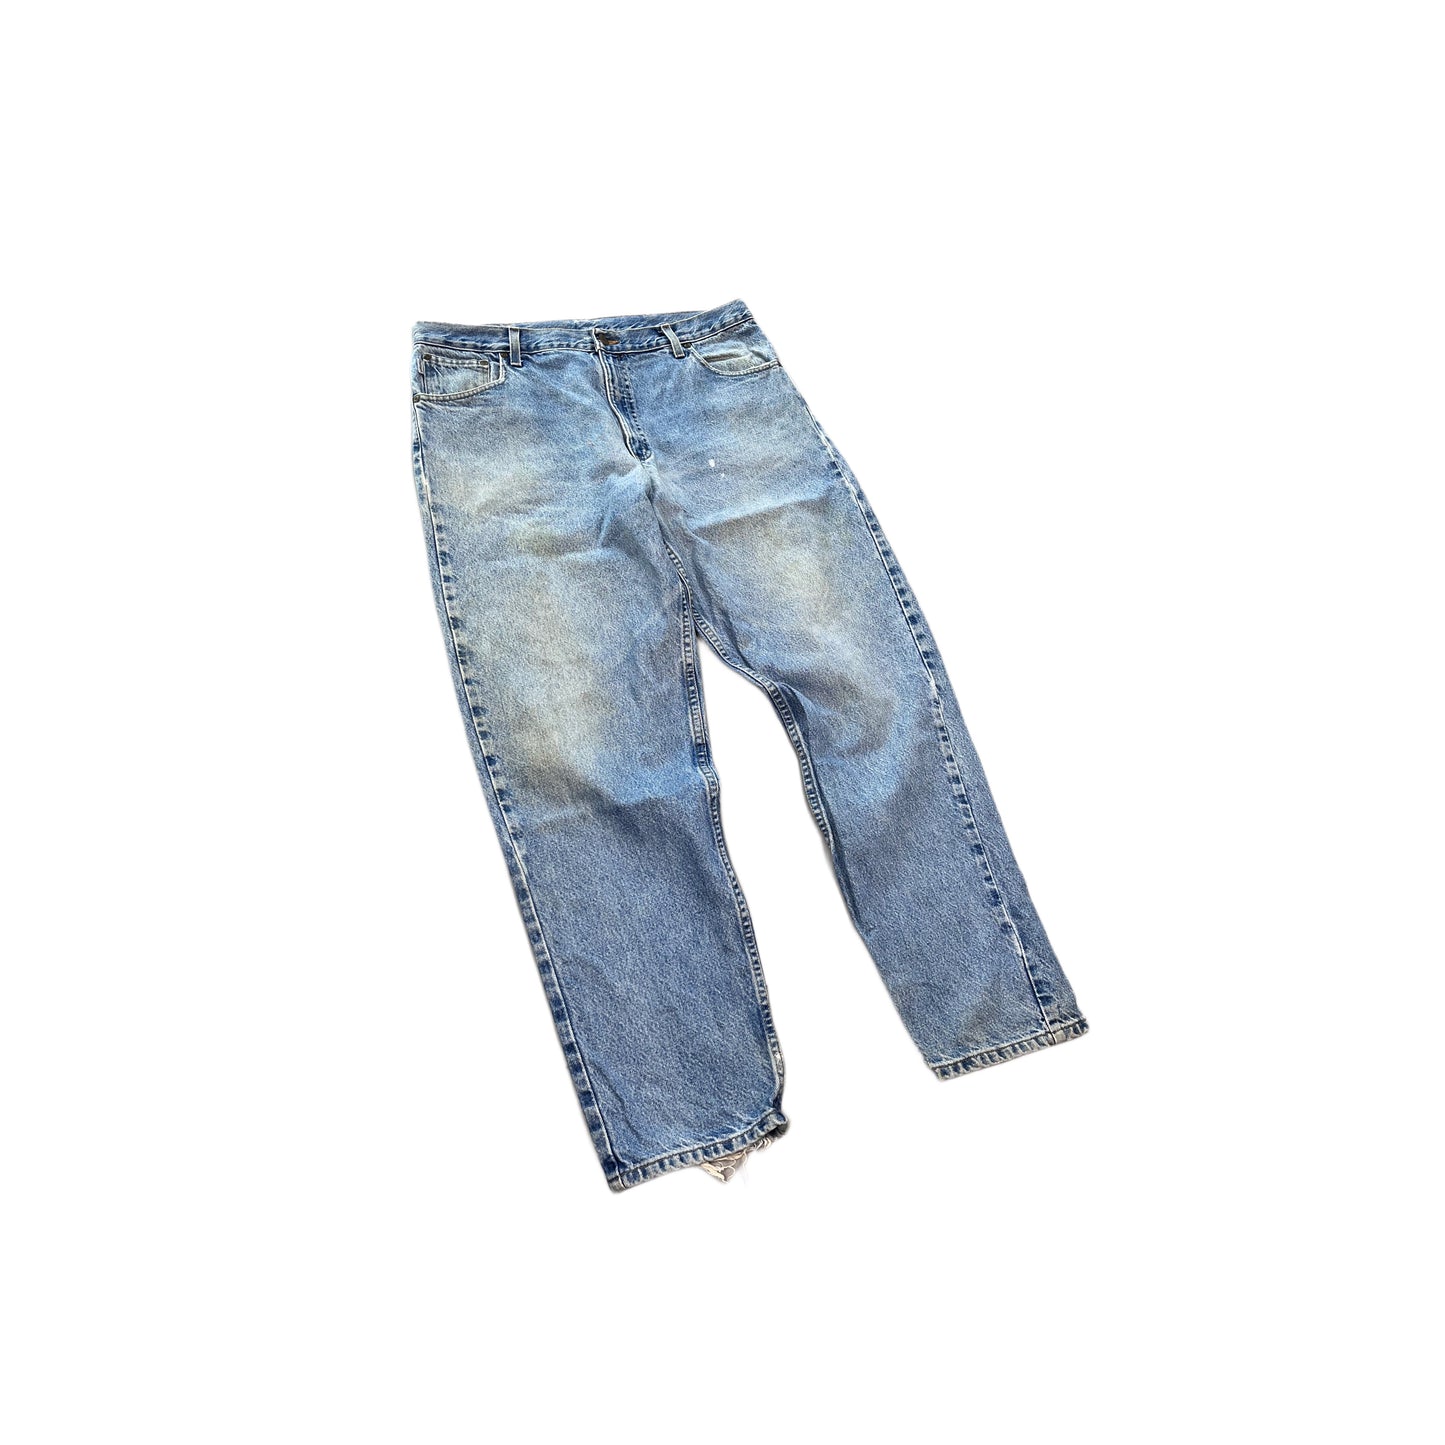 Carhartt Vintage Workwear Jeans